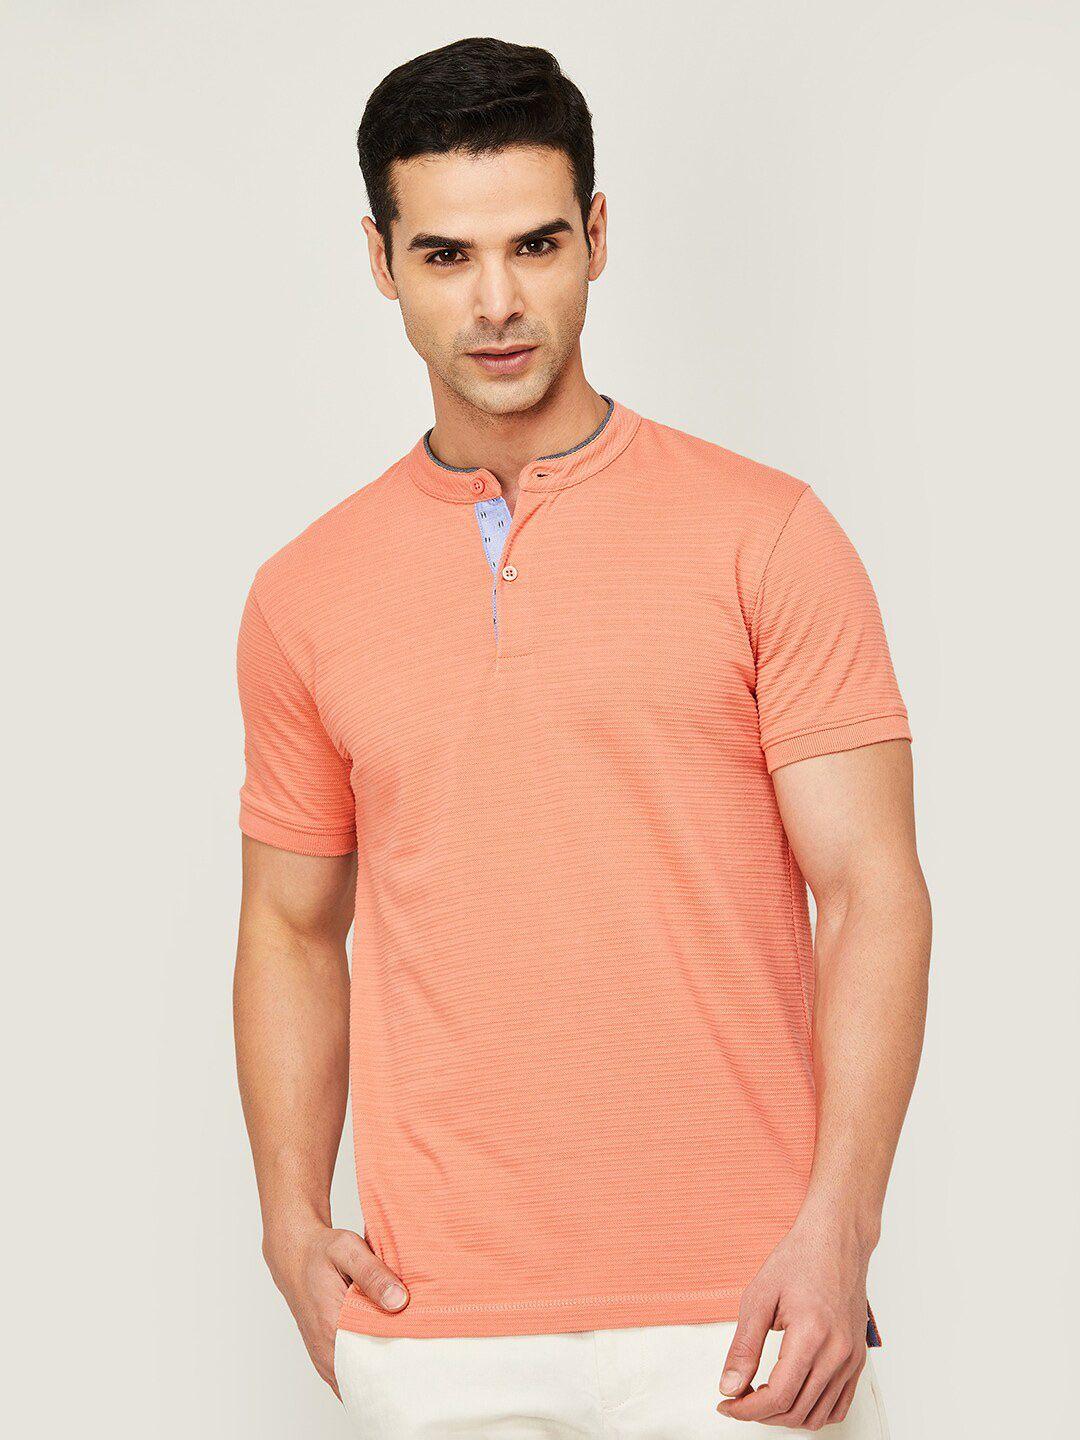 code-by-lifestyle-mandarin-collar-t-shirt